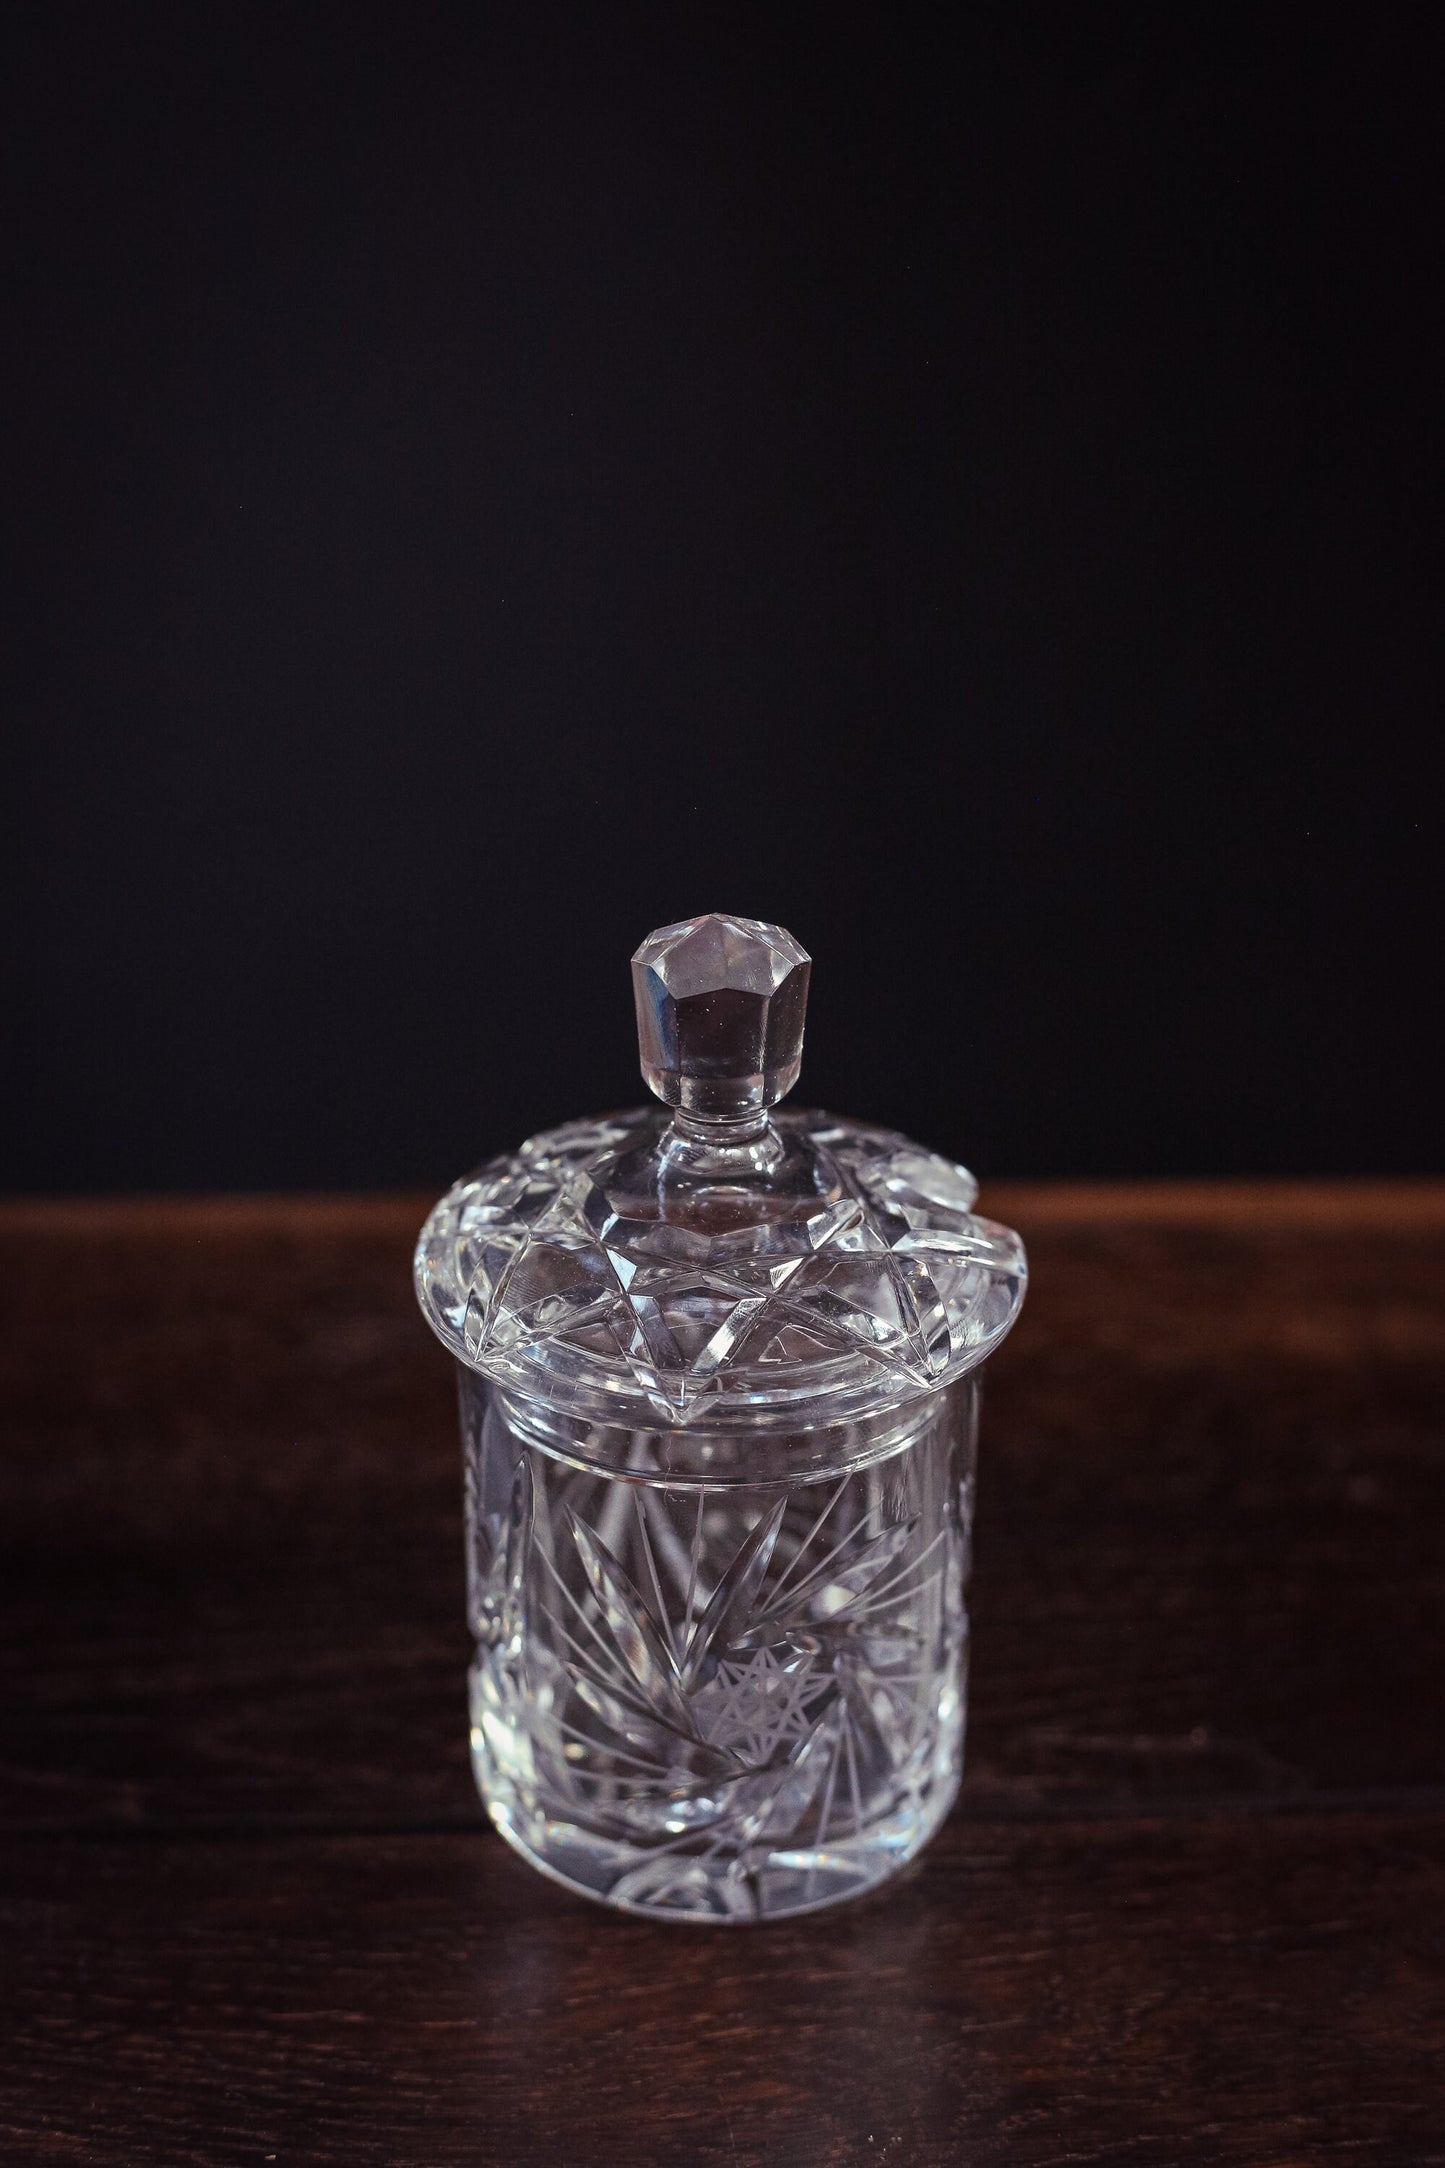 Crystal Lidded Sugar/ Jam Jar - Vintage Cut Glass Sugar Container